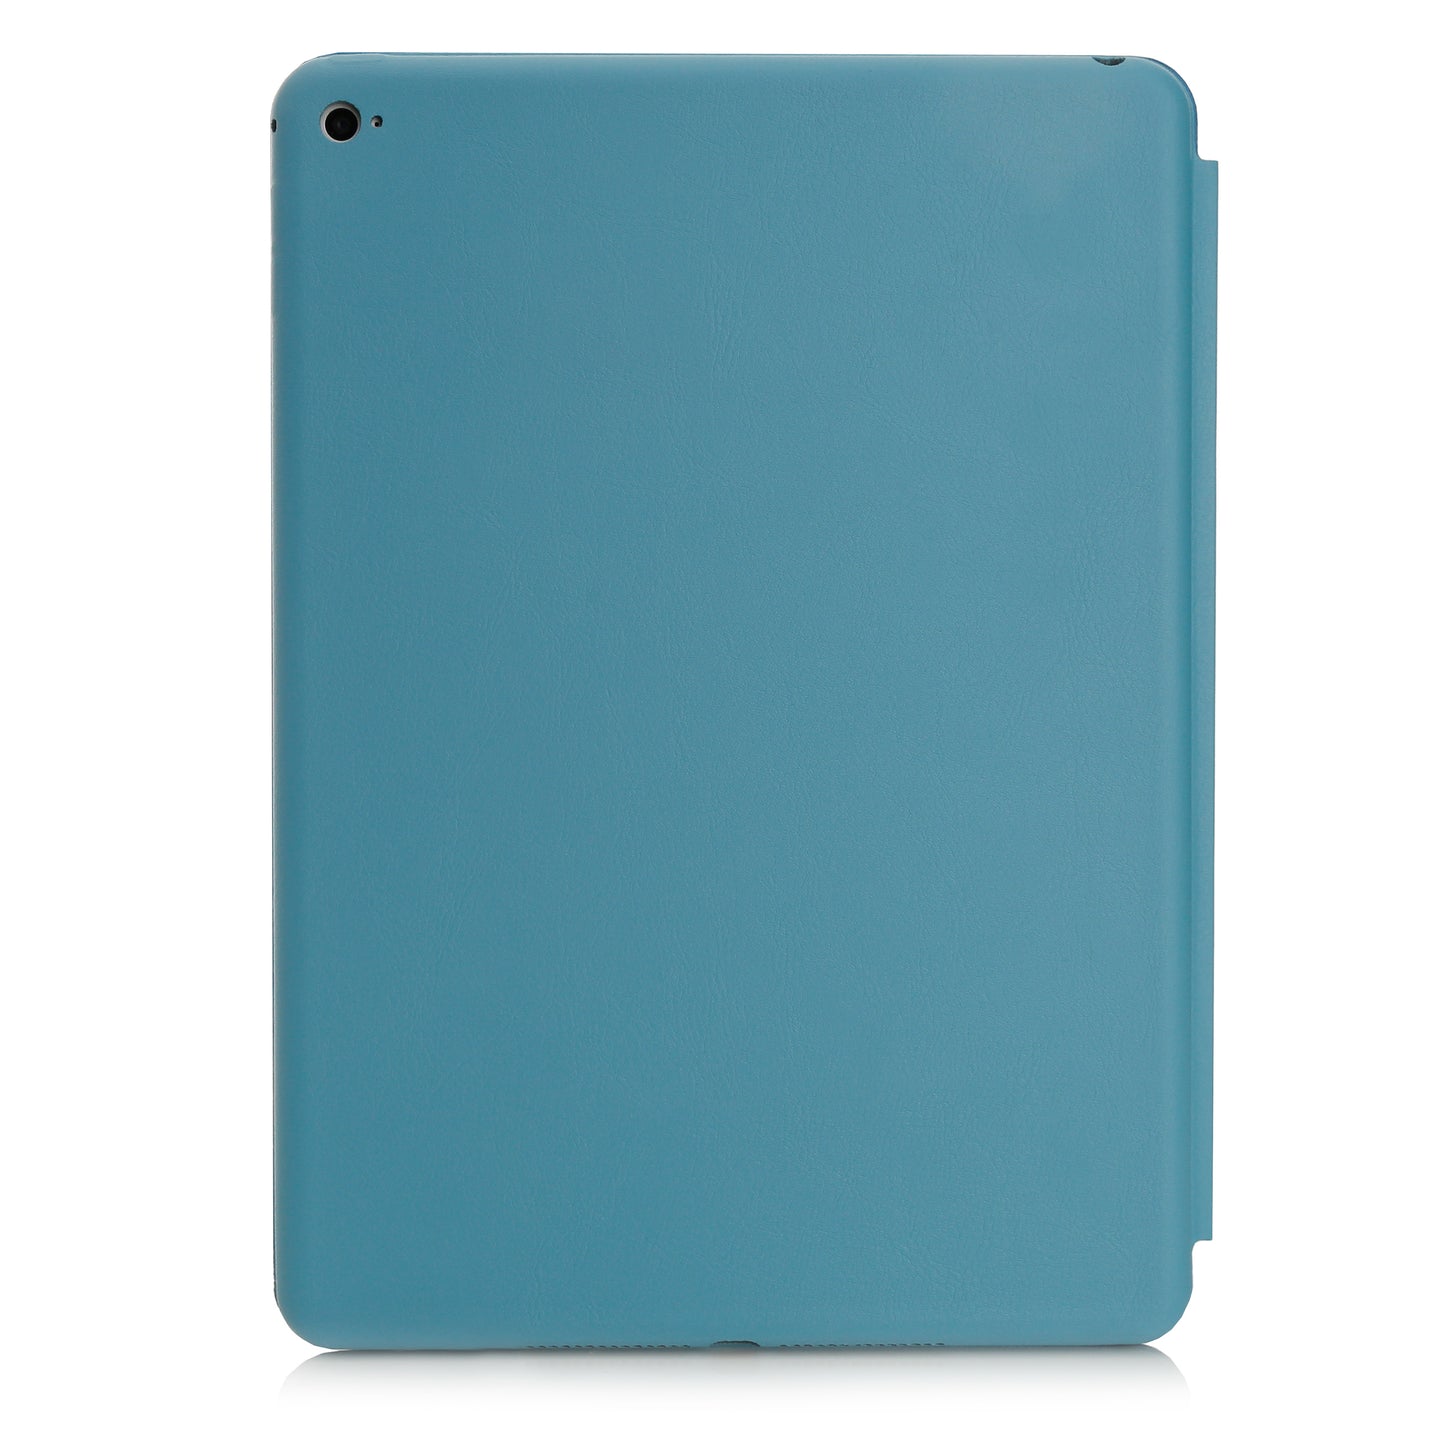 iCEO iPad mini 4 SmartCover Case